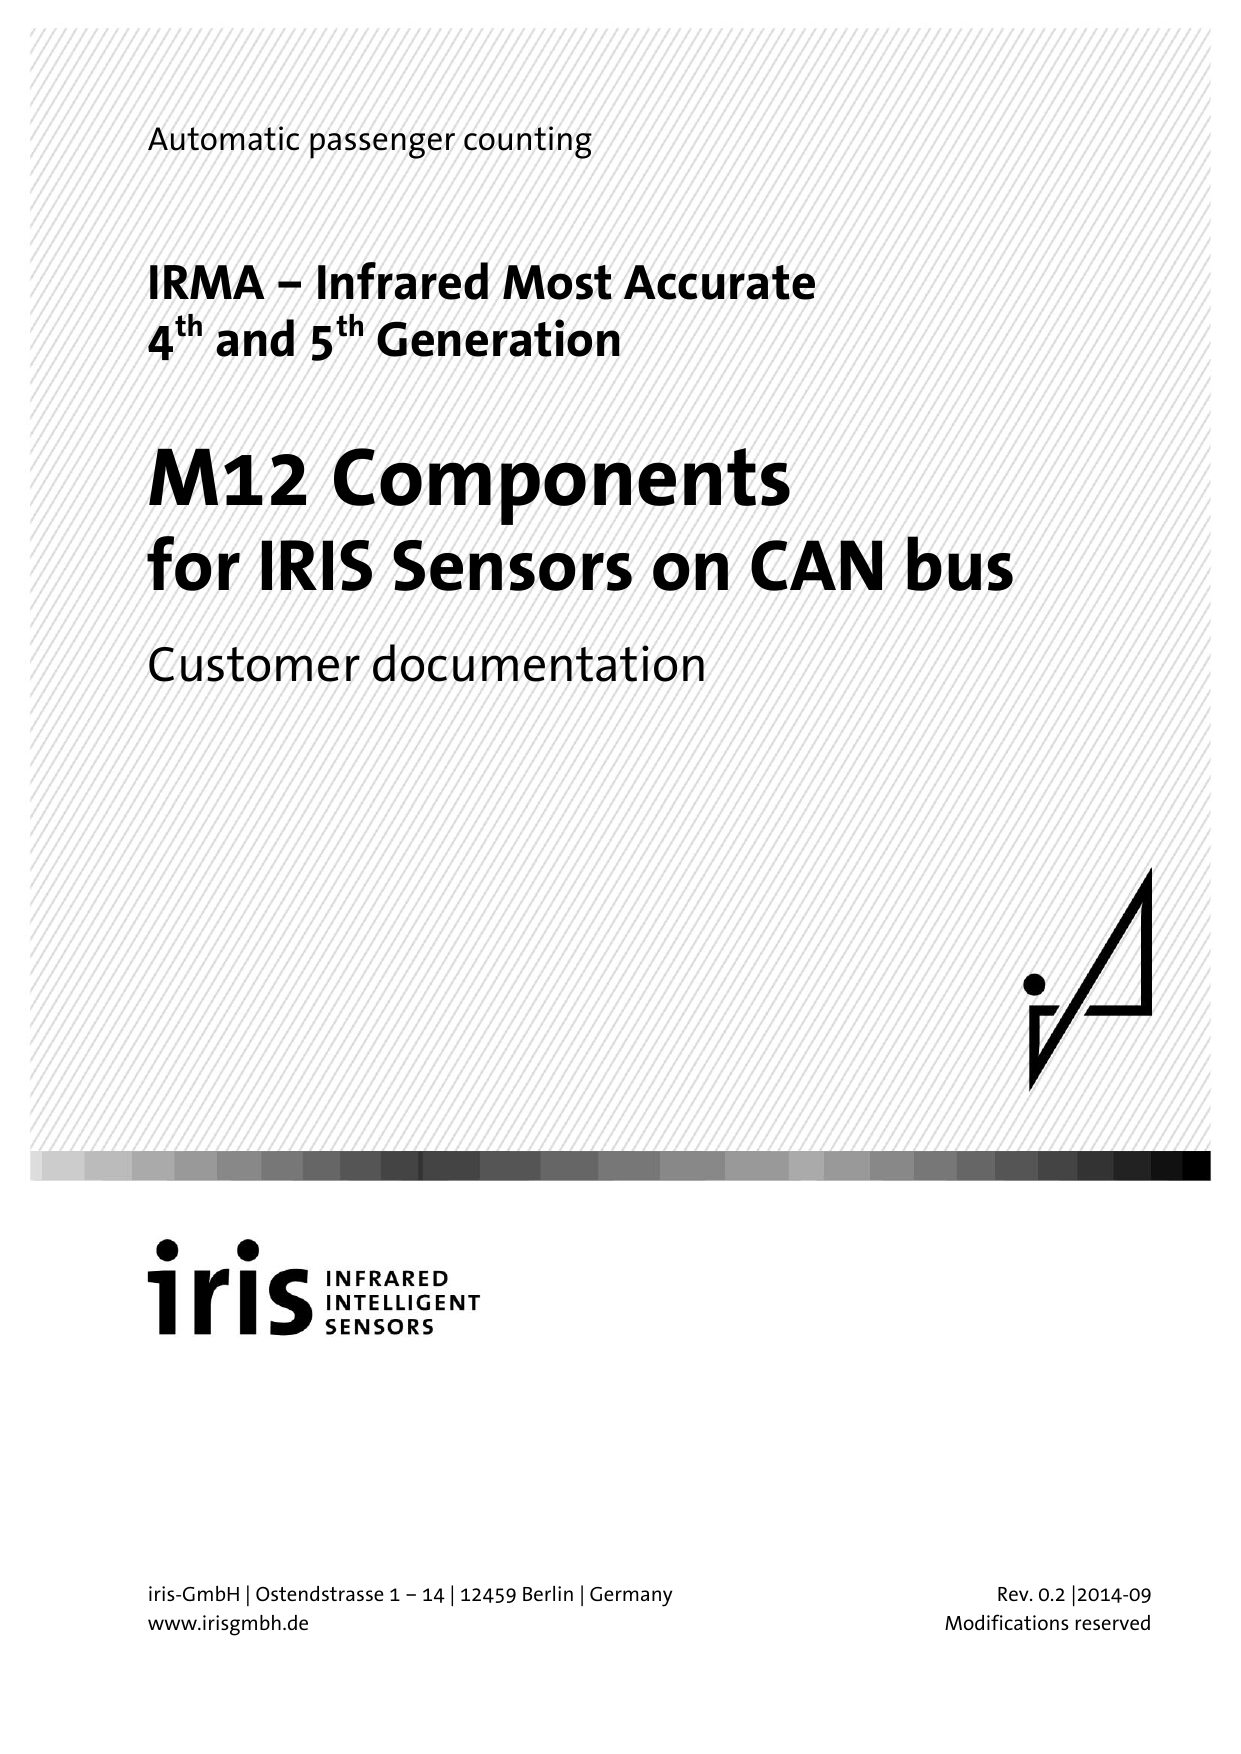 IRIS M12 Components